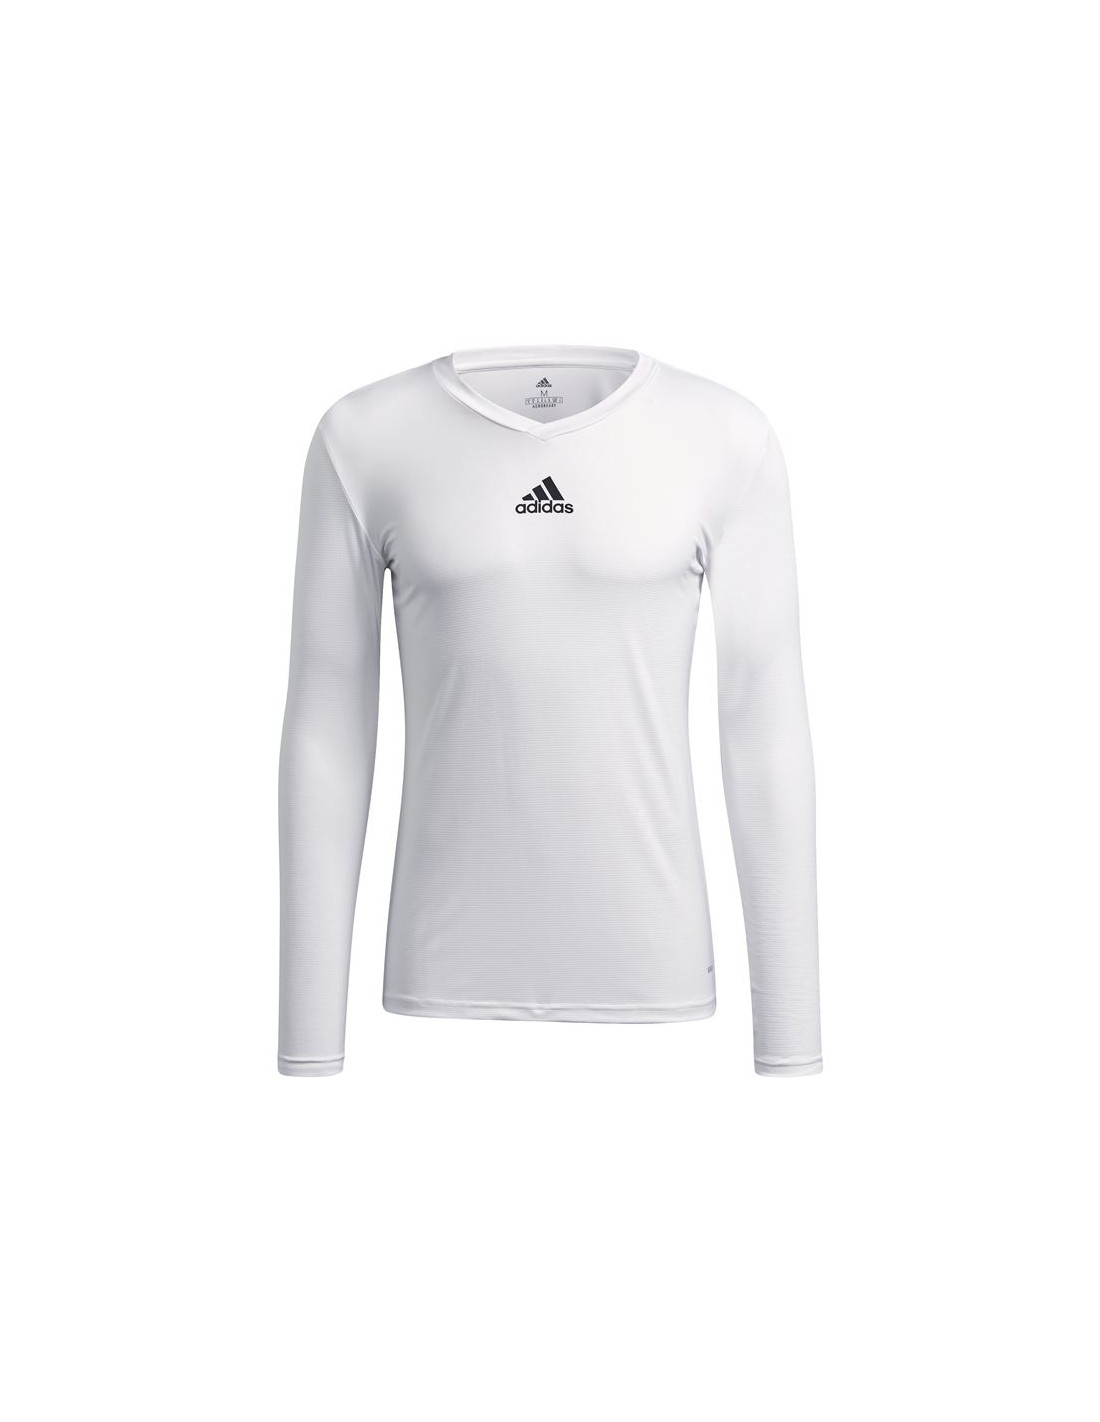 Camiseta de fútbol adidas team base m blanco